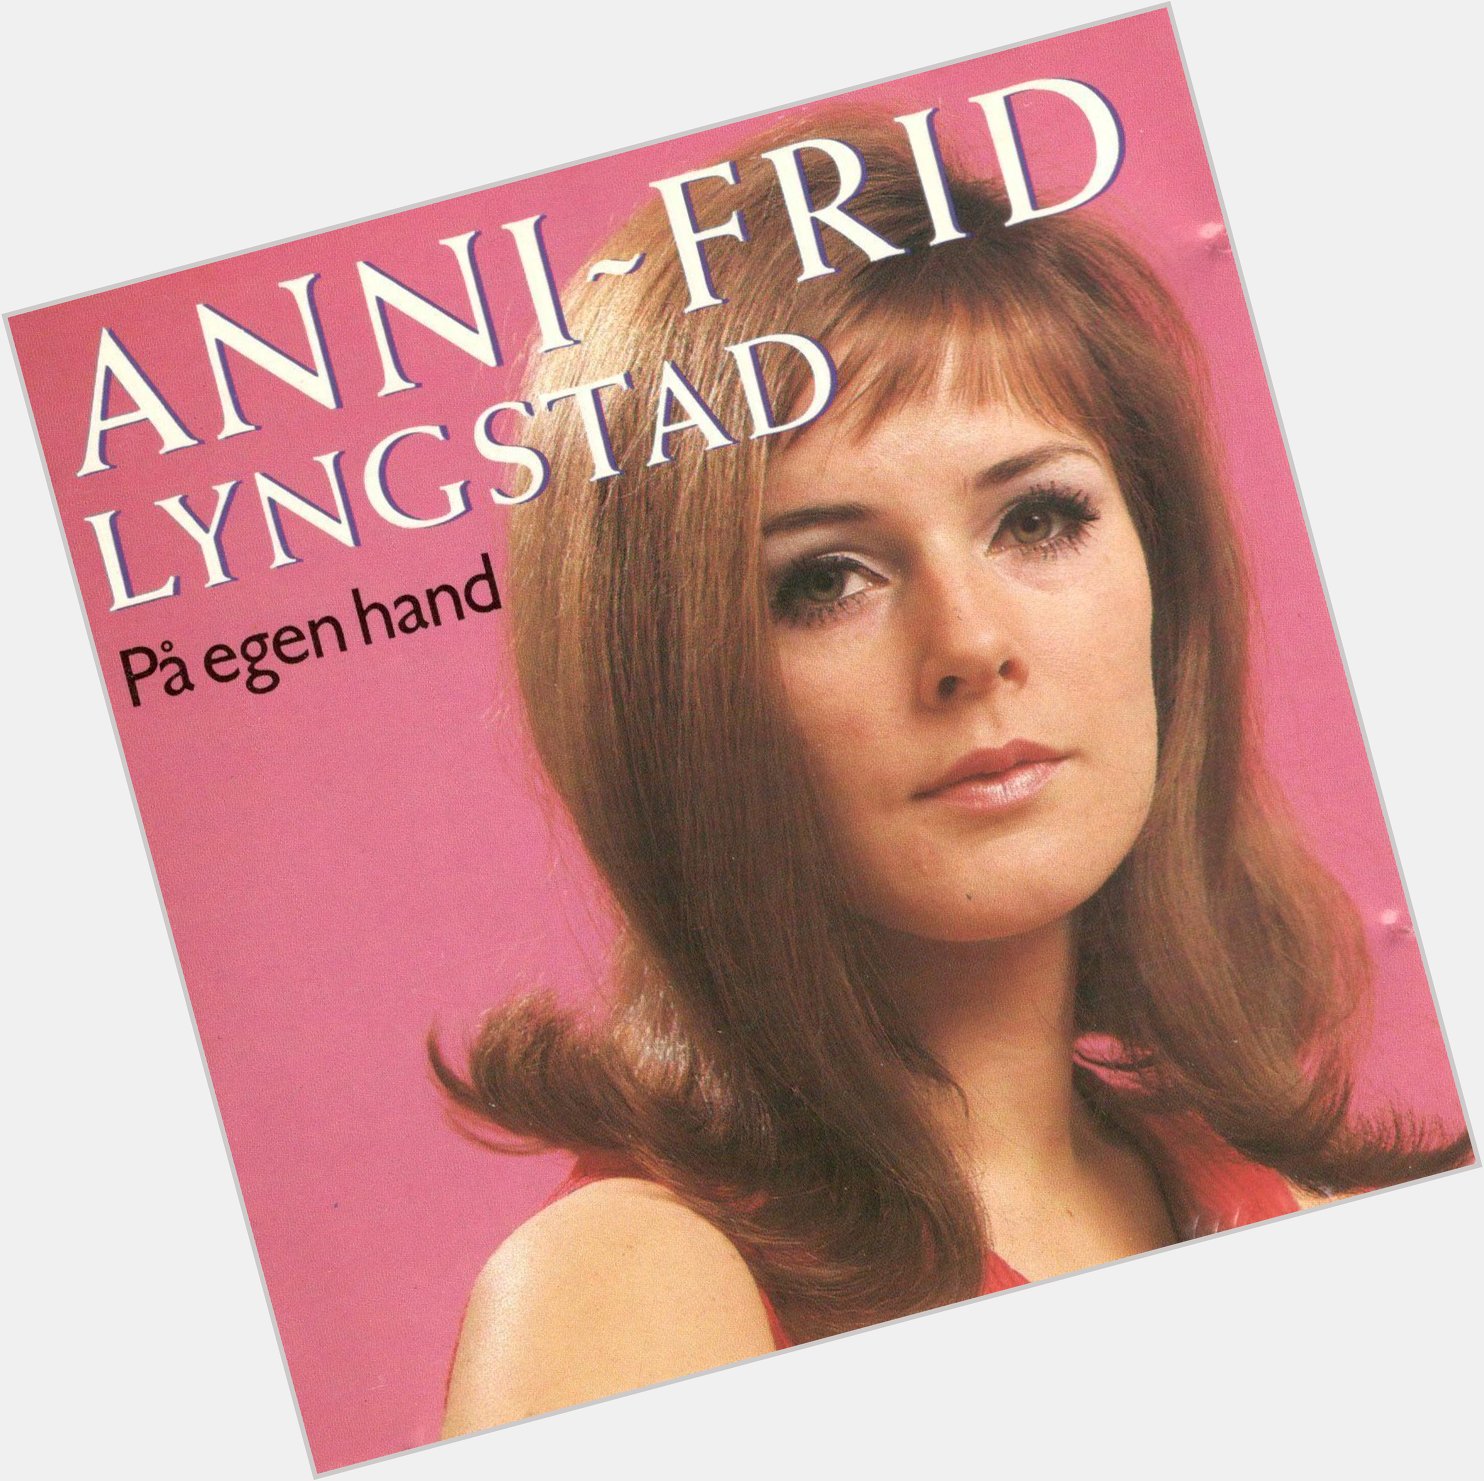 Happy 69th birthday Anni-Frid Lyngstad! lycklig födelsedag 